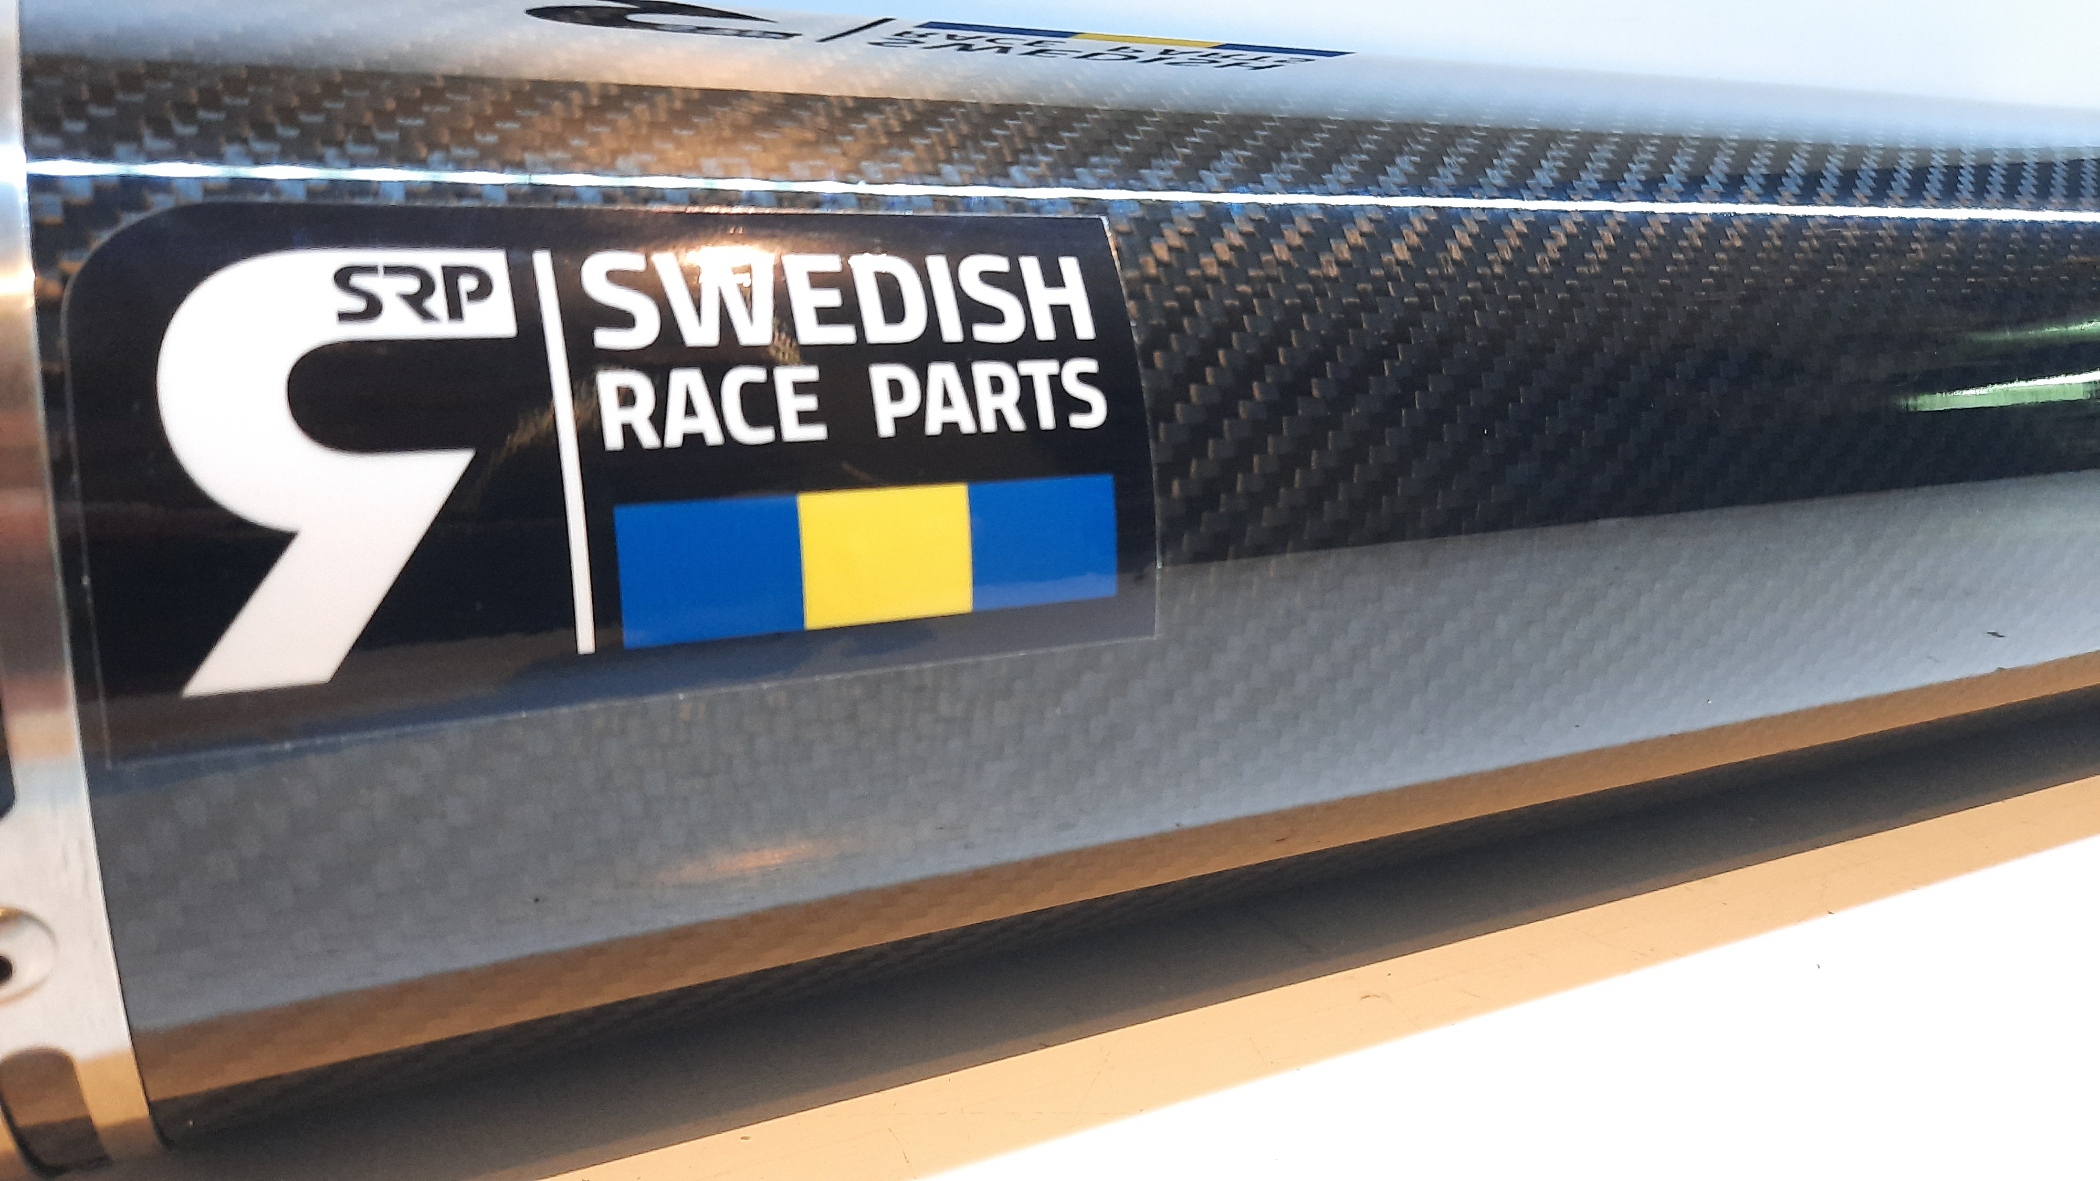 swedishraceparts.se